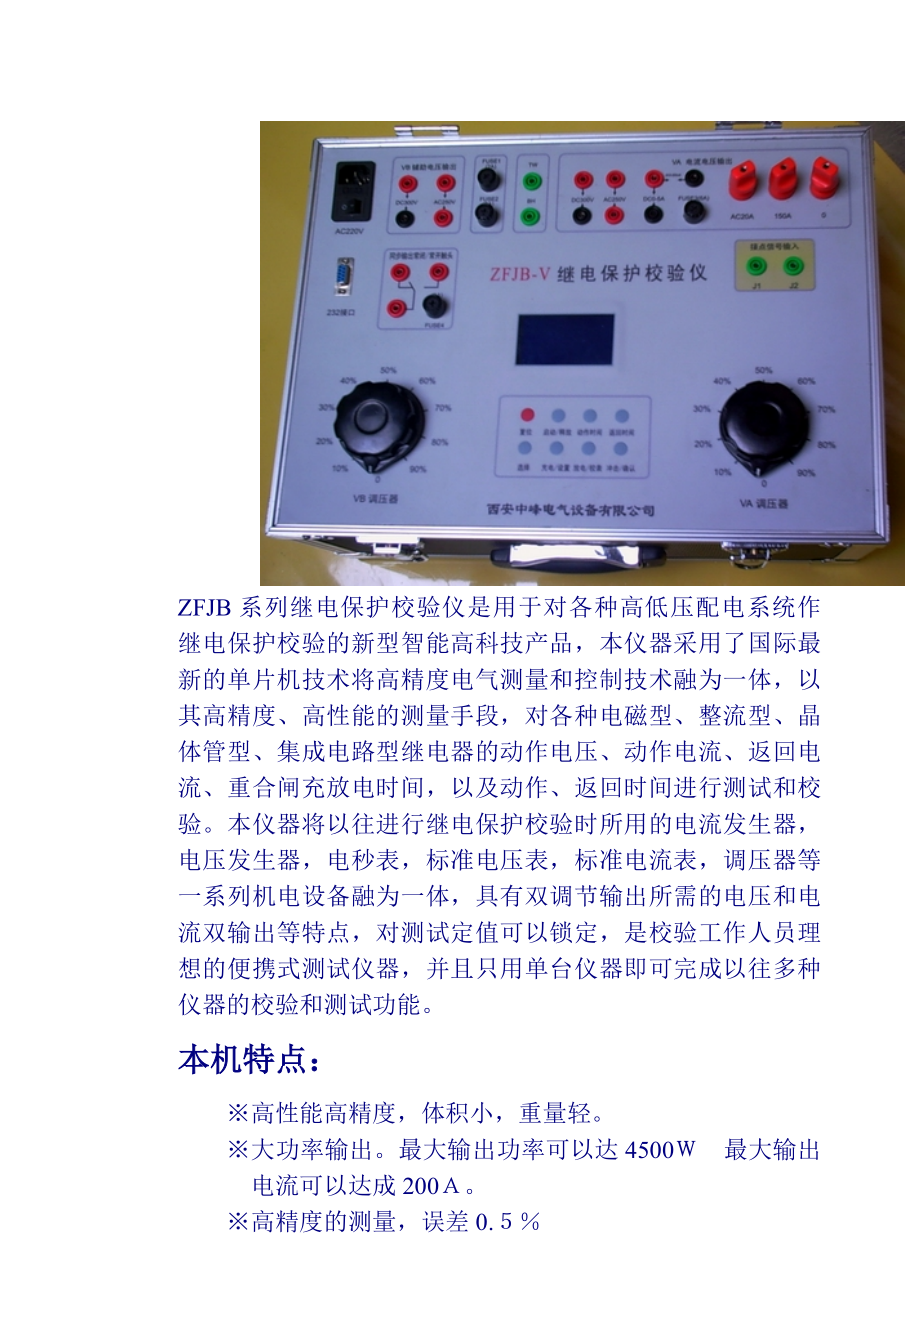 ZFJB系列继电保护校验仪是用于对各种高低压配电系统作继_第1页